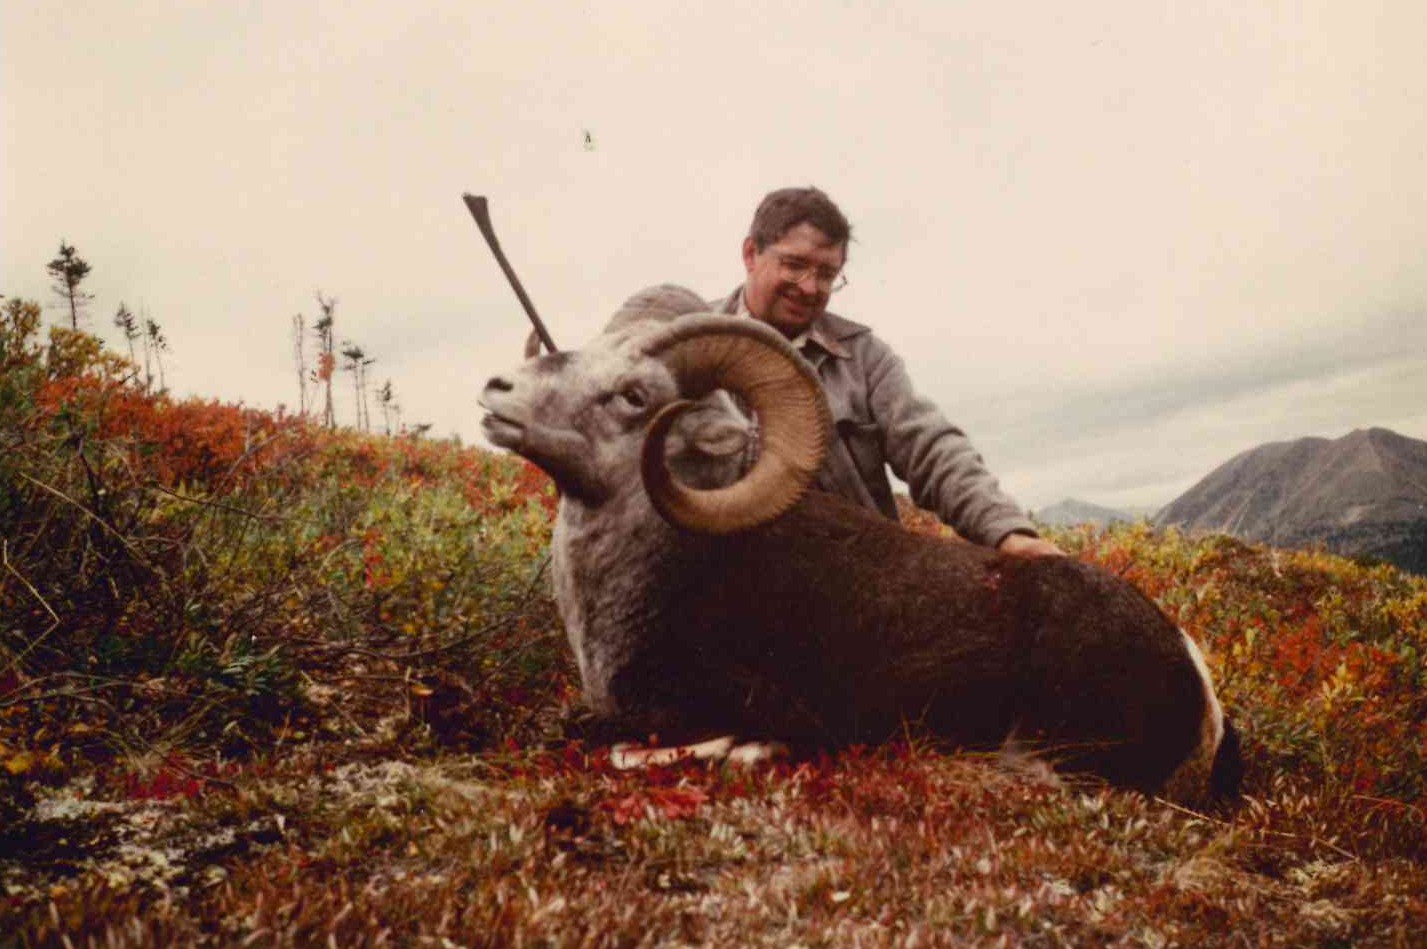 Jack, an avid sheep hunter, with a trophy bighorn ram.